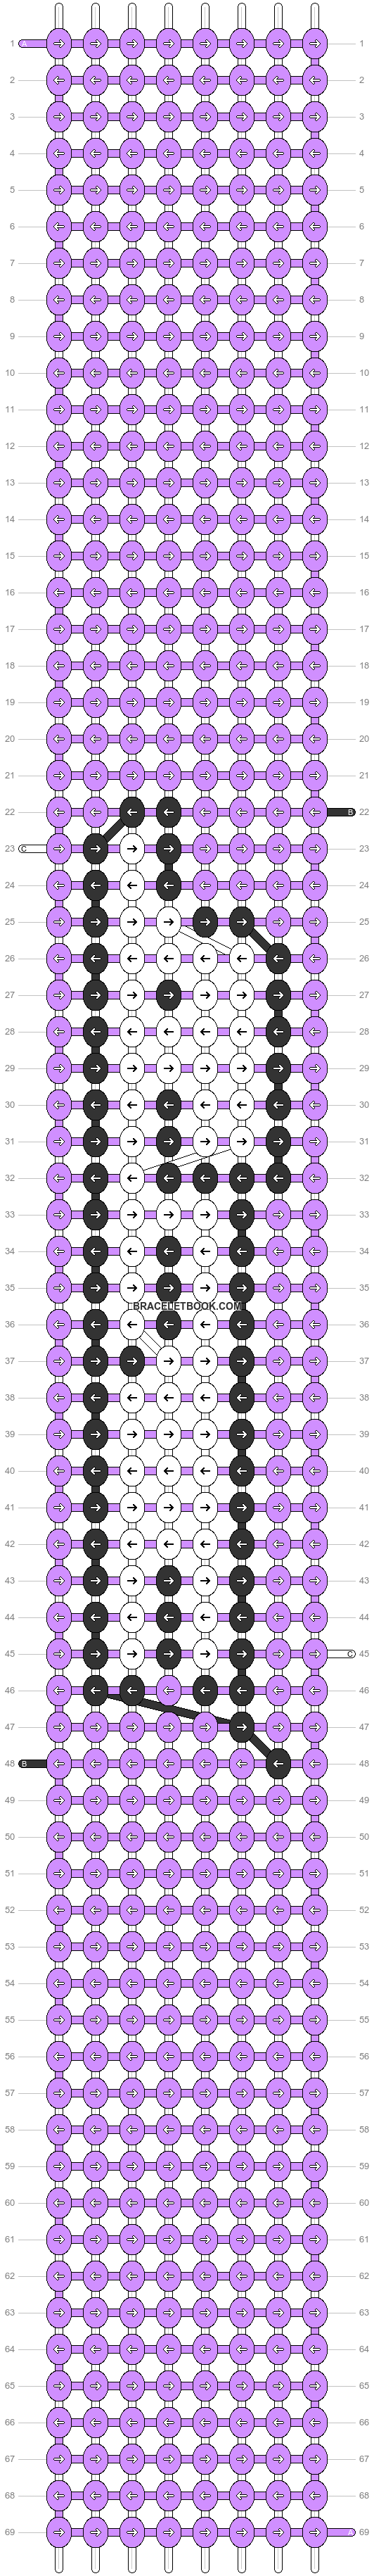 Alpha pattern #36517 variation #332247 pattern